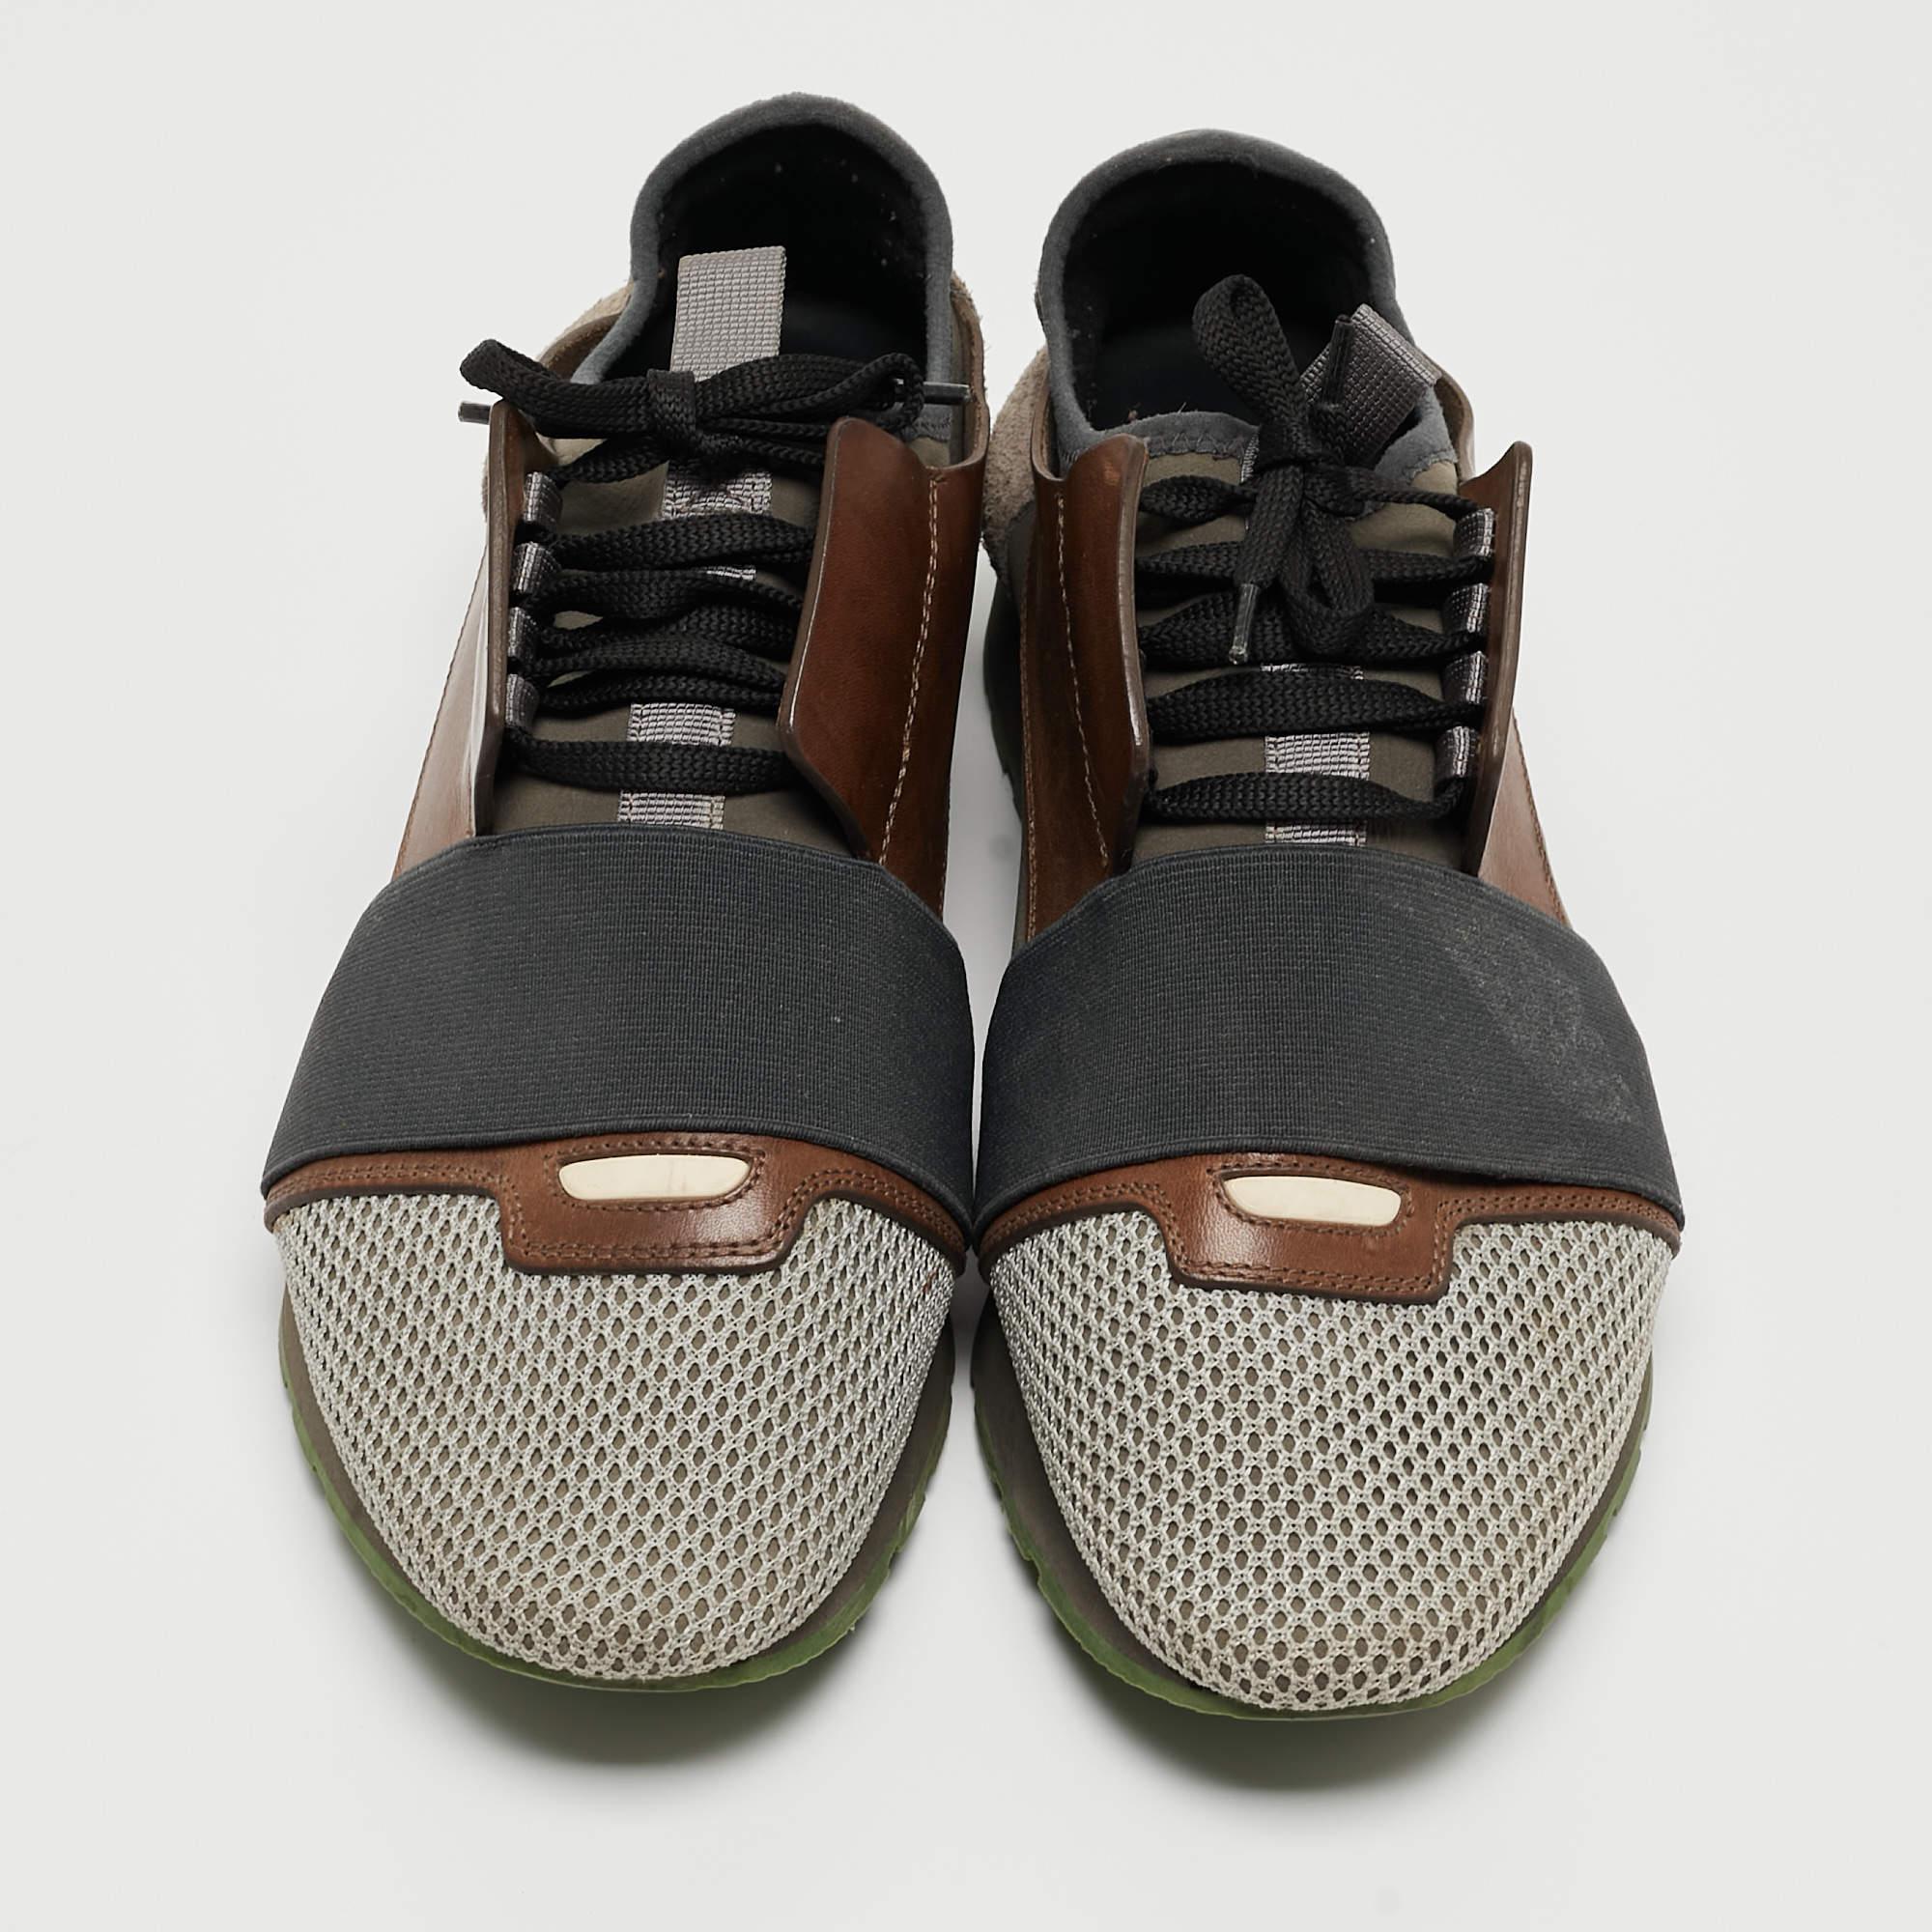 Balenciaga Tricolor Leather and Mesh Race Runner Sneakers Size 40 In Good Condition For Sale In Dubai, Al Qouz 2